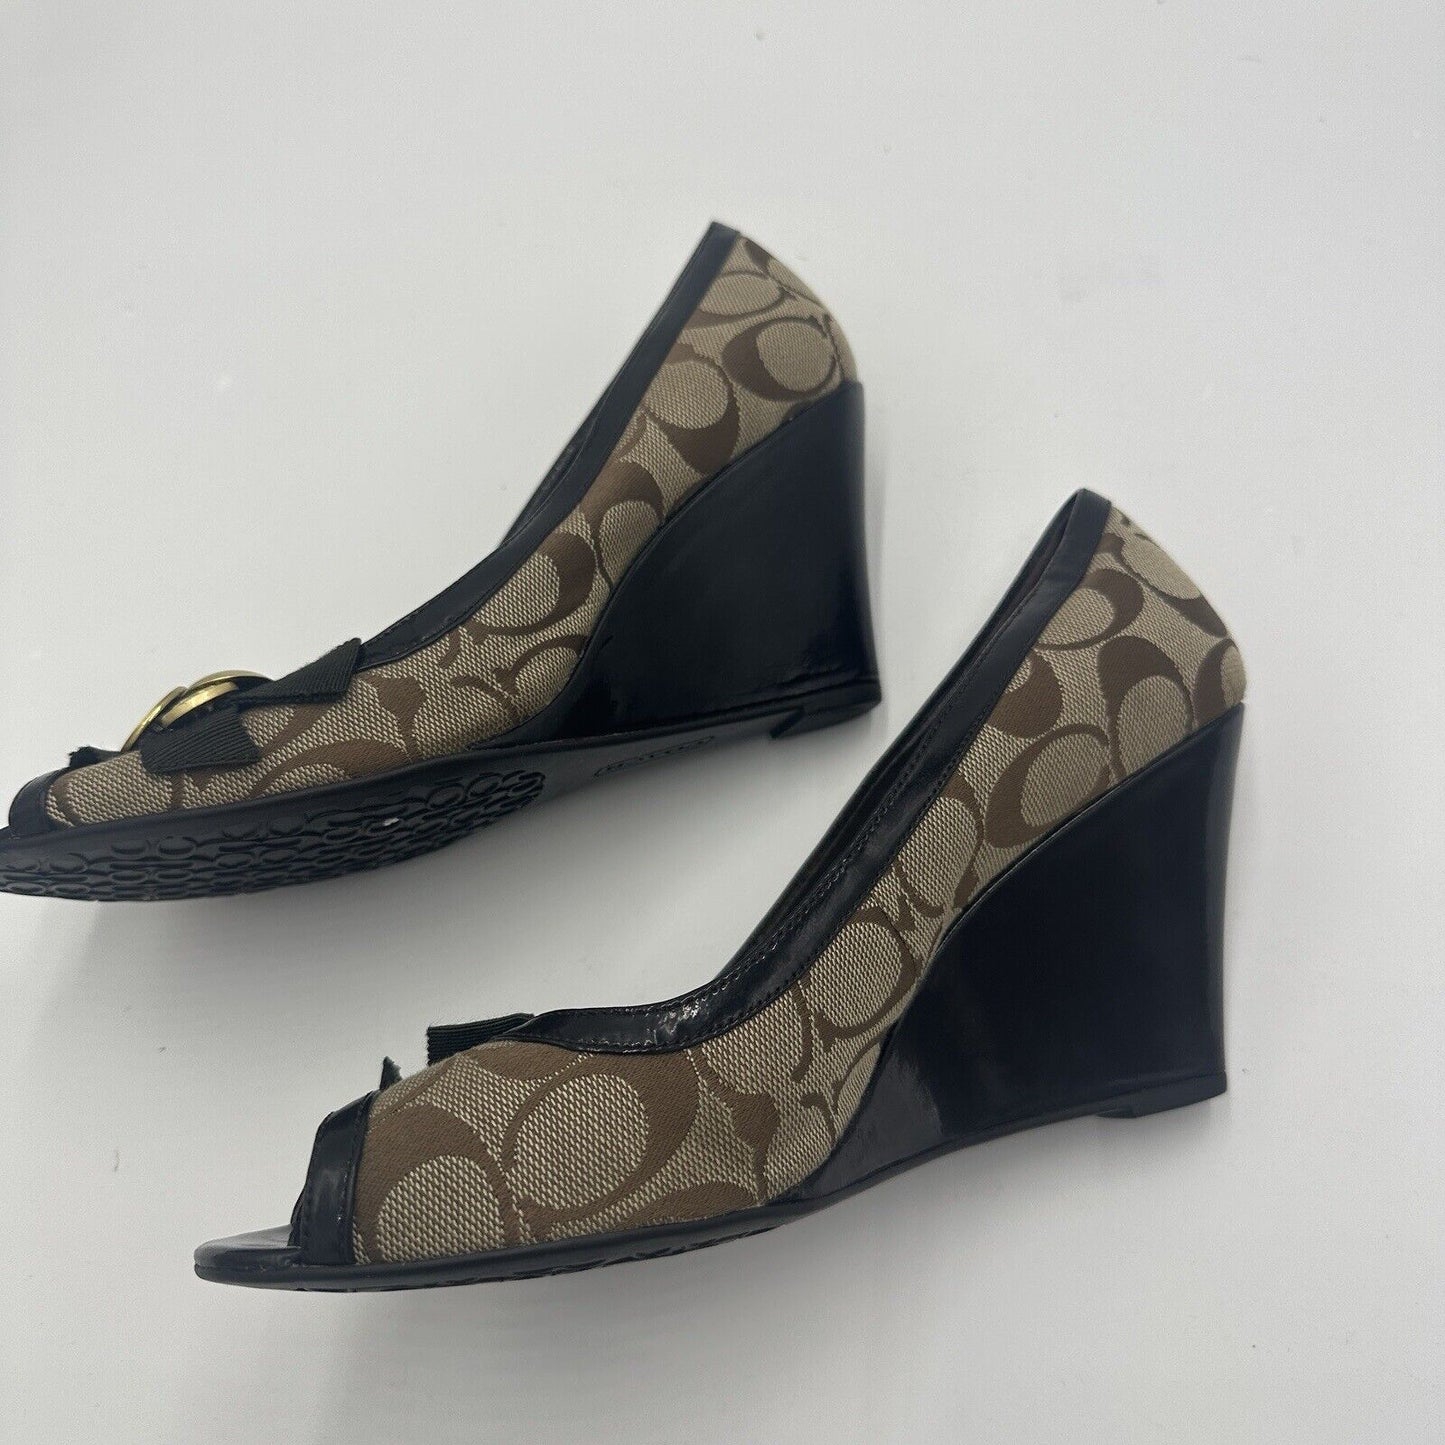 Coach Women's Peep Toe Wedge Heels Shoes Size 9B Black Beige Brown W/Bow Accent